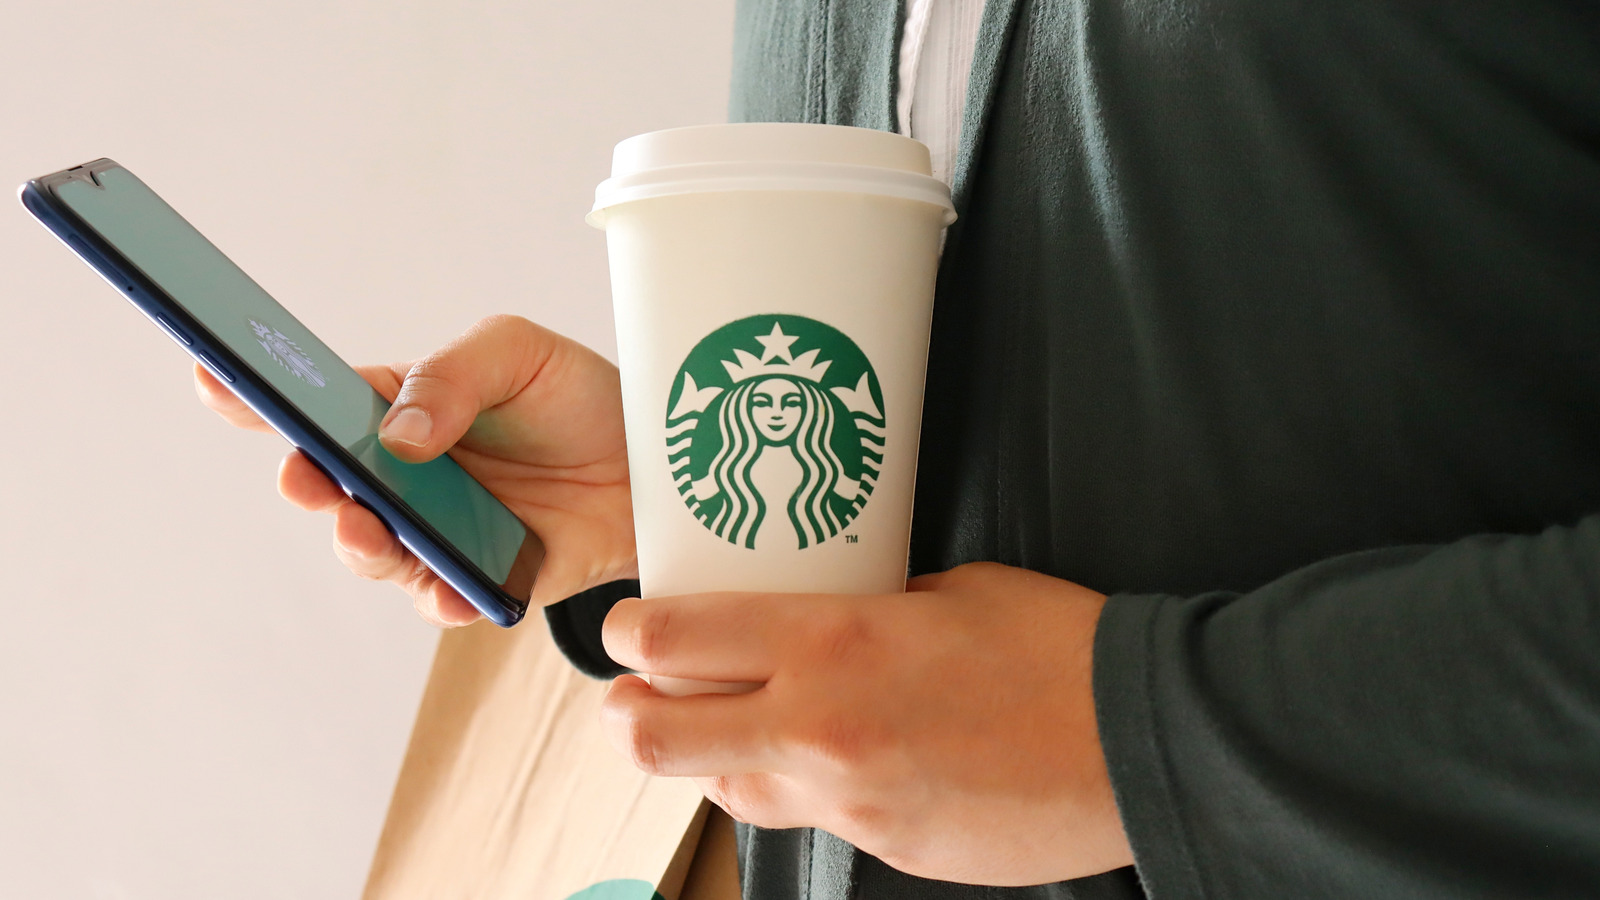 Starbucks chose Webiny to power their loyalty app